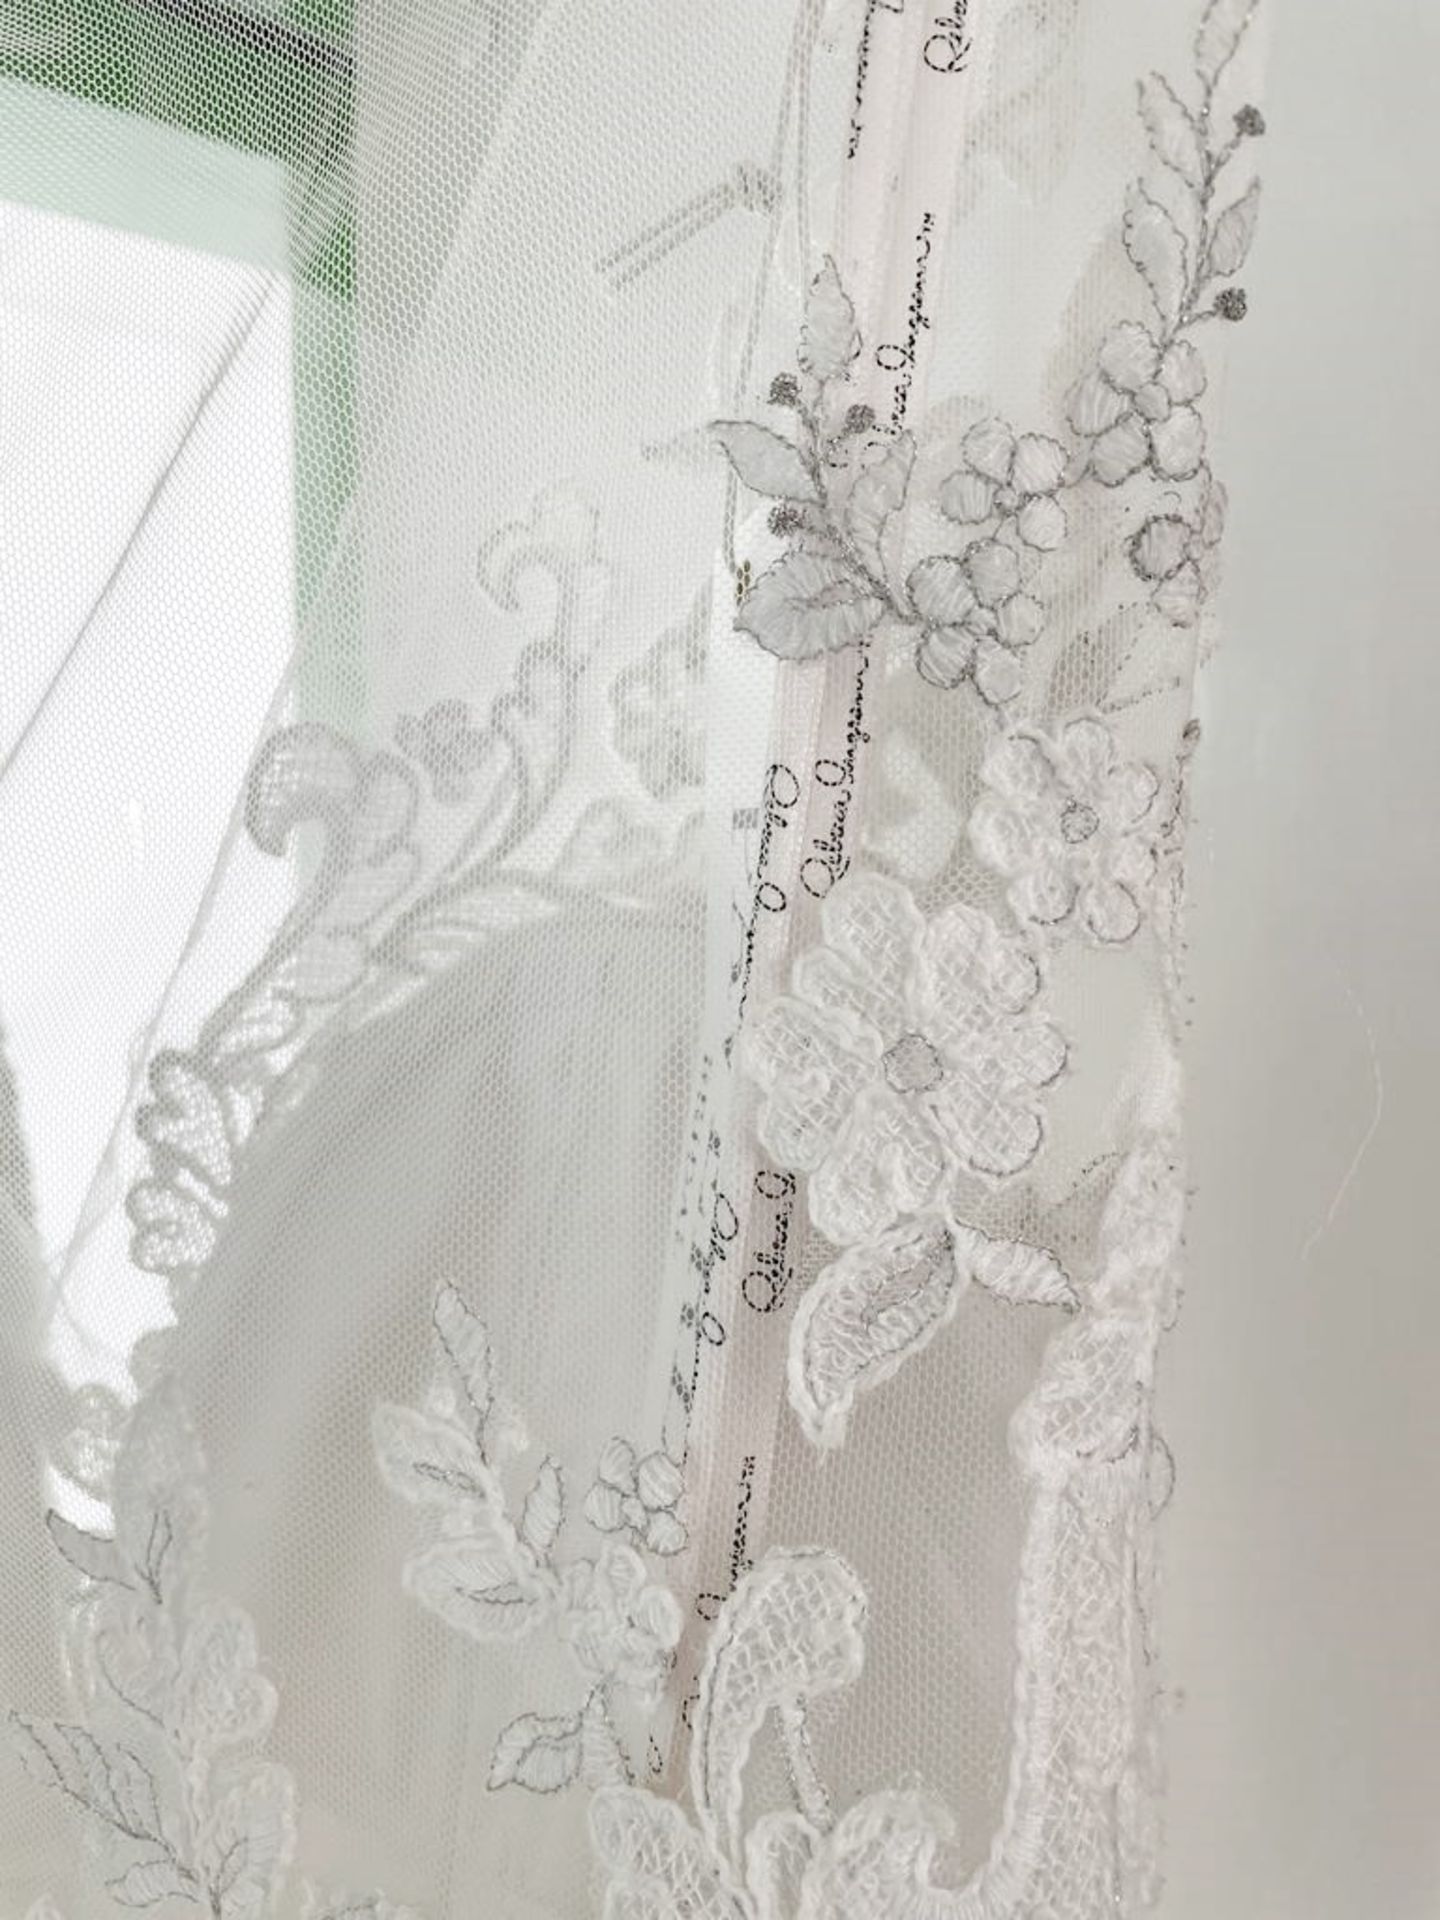 1 x REBECCA INGRAM 'Camille' Designer Wedding Dress Bridal Gown - Size: UK 10 - Original RRP £1,450 - Image 14 of 15